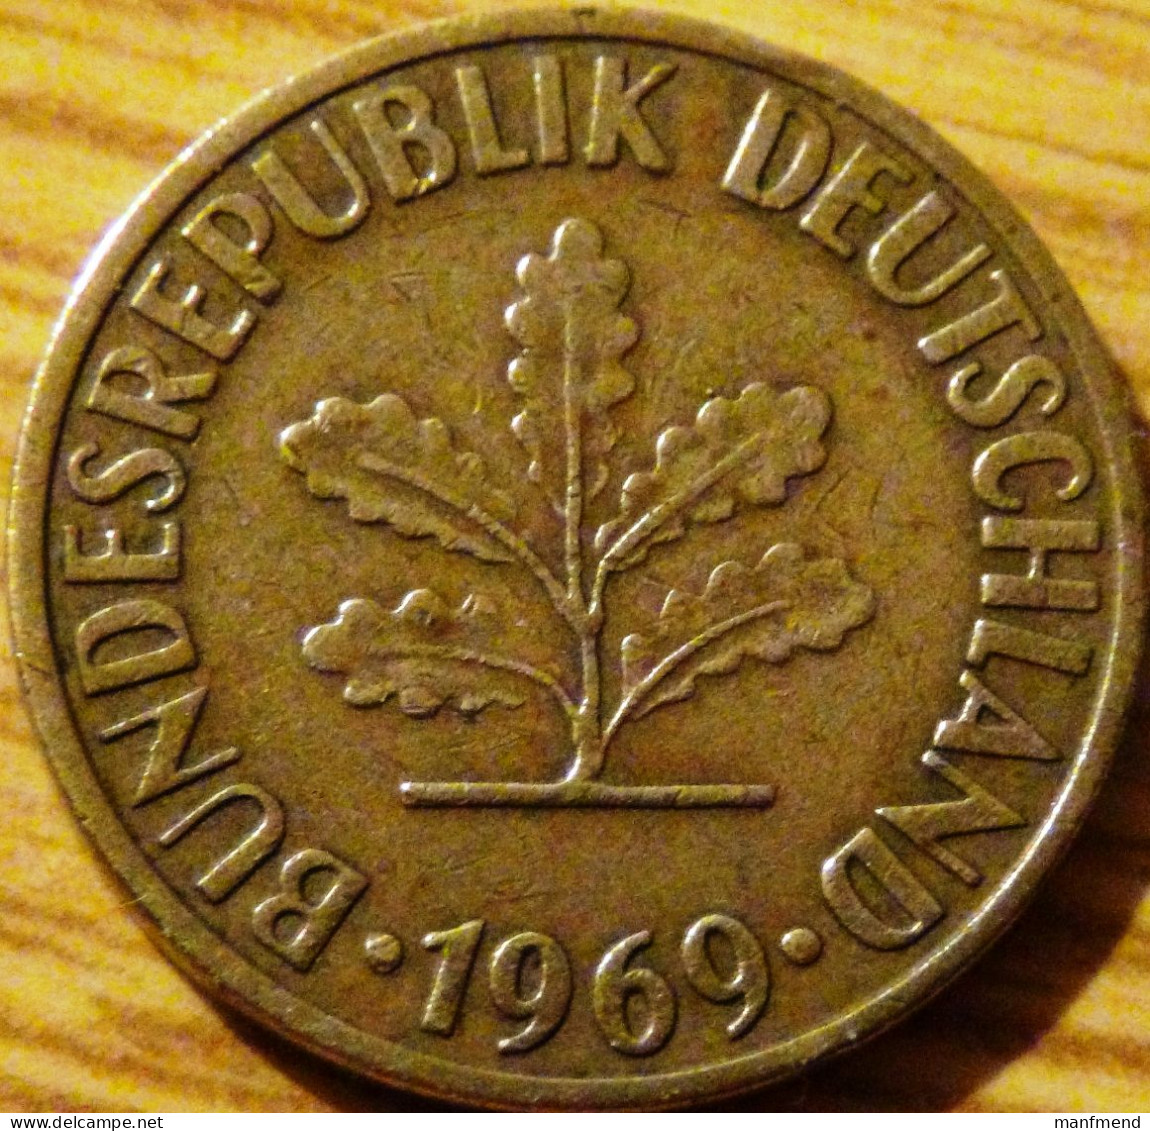 Germany - 1969 - KM 108 - 10 Pfennig - Mintmark "F" - Stuttgart - VF - Look Scans - 10 Pfennig